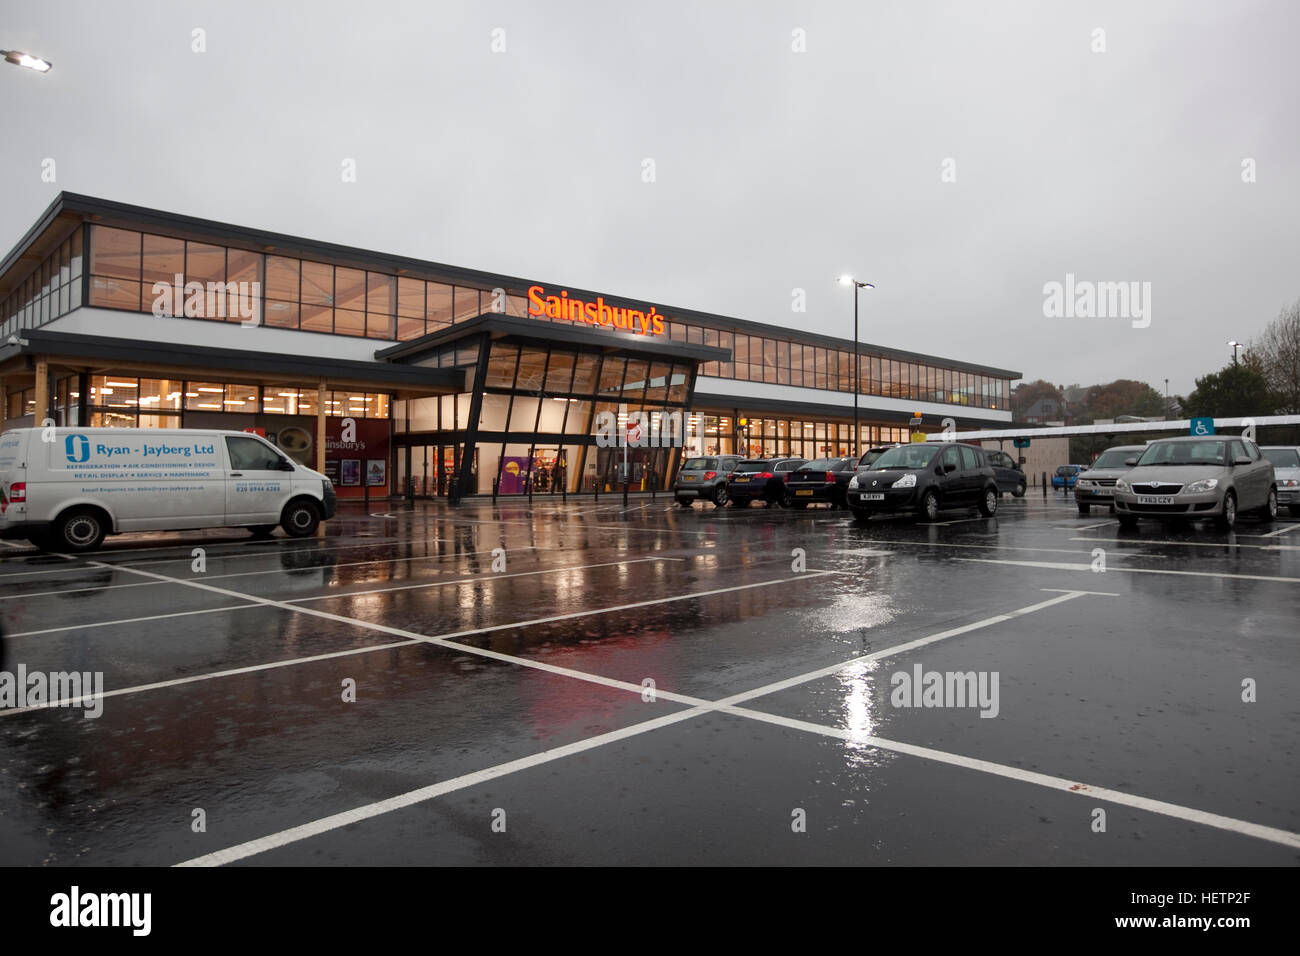 Sainsbury's Weymouth Superstore Foto Stock